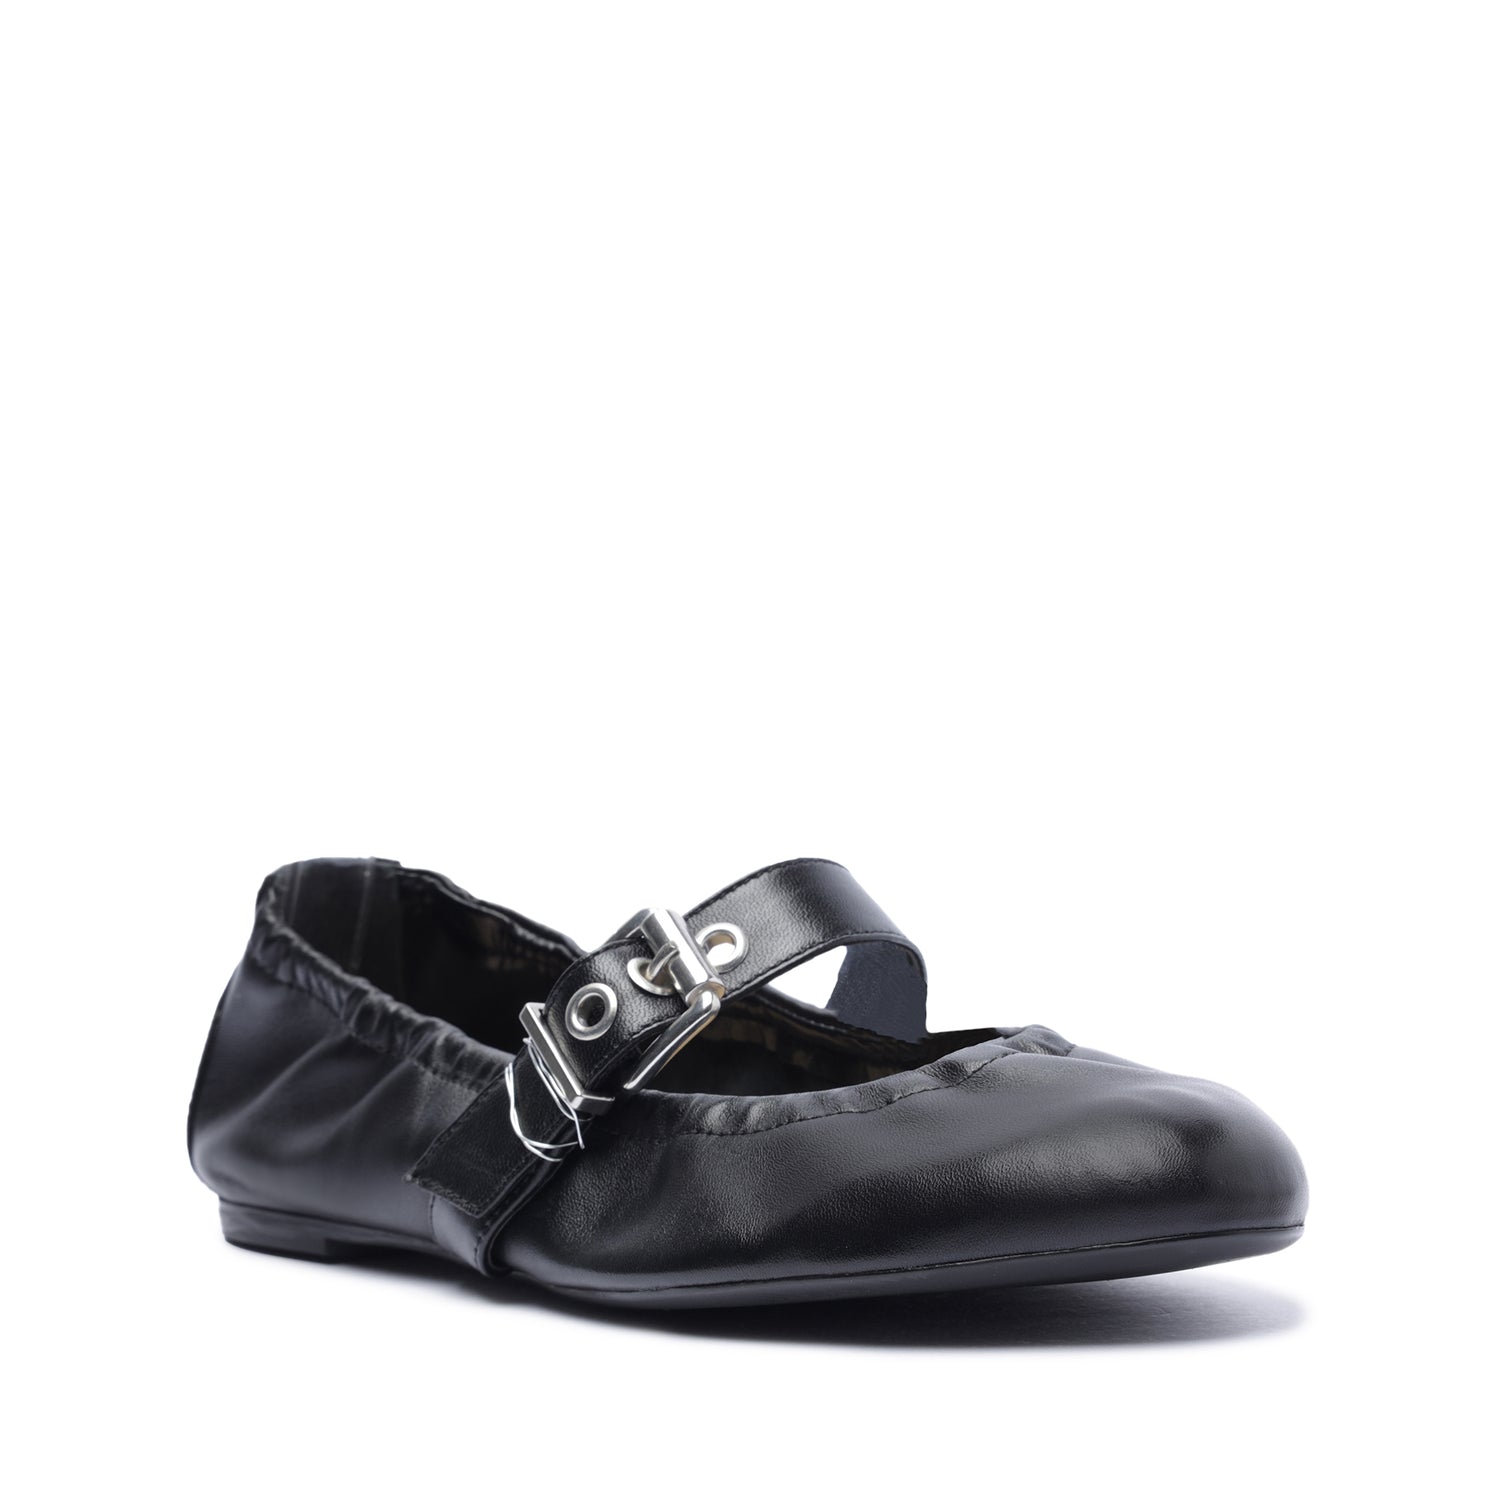 Calita Nappa Leather Flat Flats Pre Fall 23    - Schutz Shoes